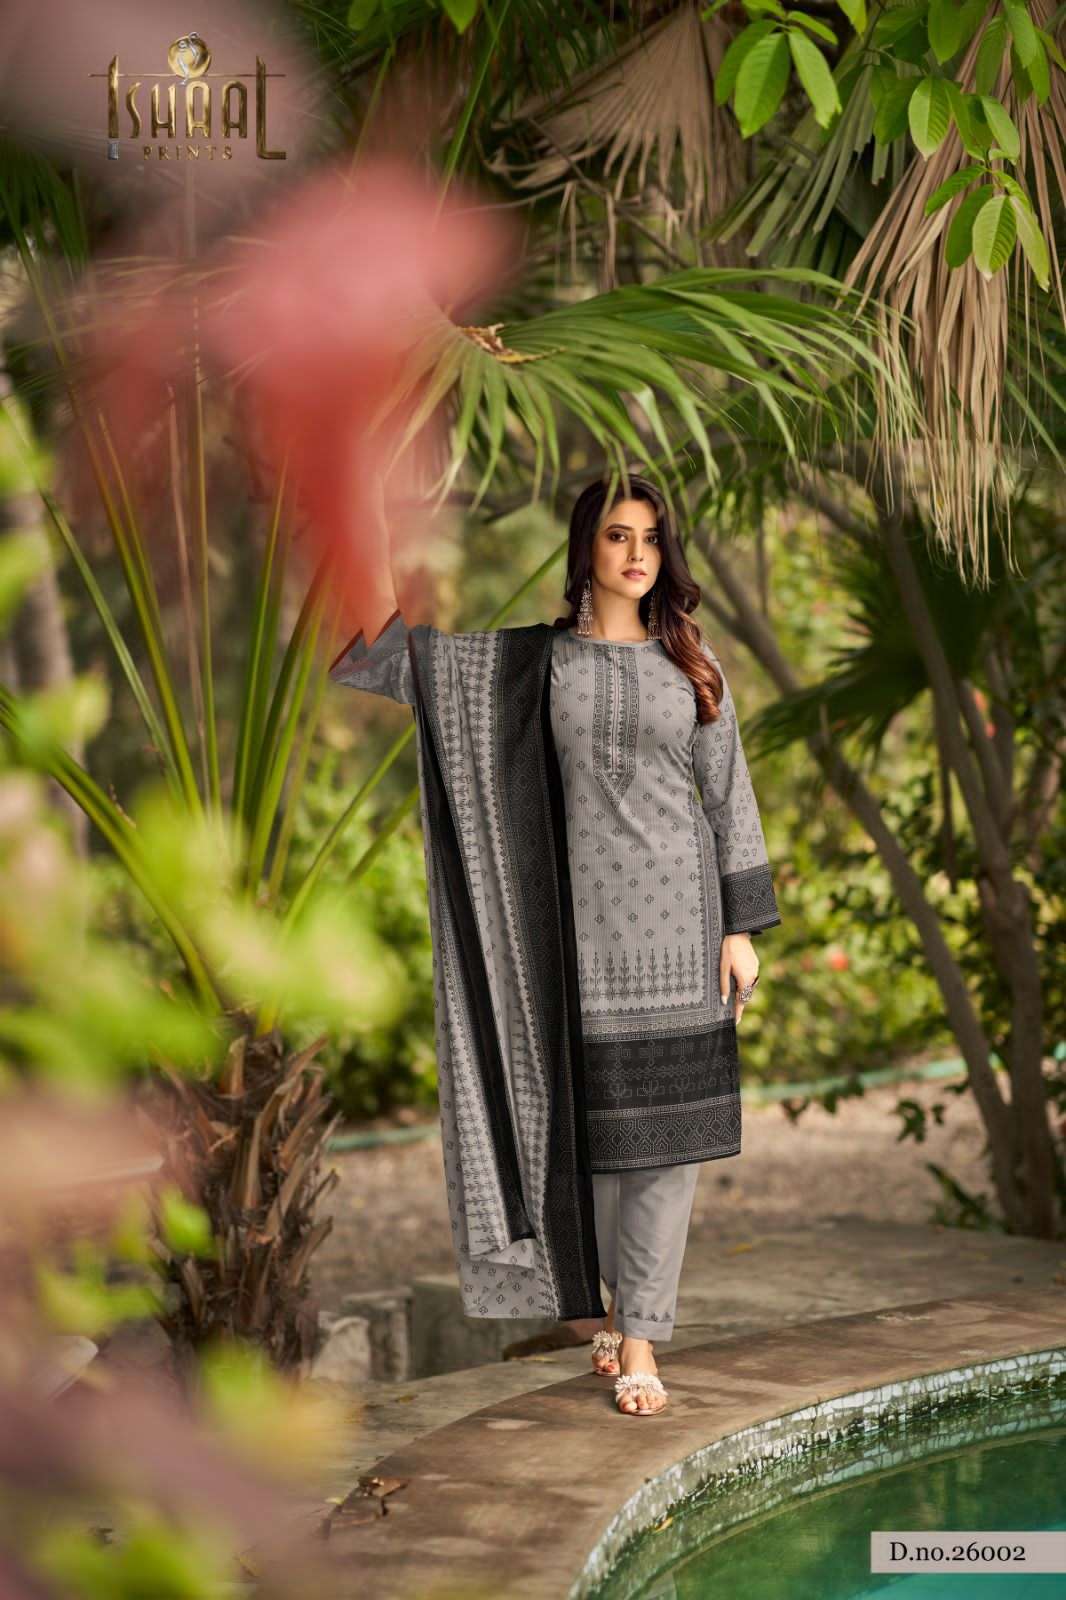 ishaal prints gulmohar vol-26 26001-26010 series pure lawn designer salwar suits catalogue surat